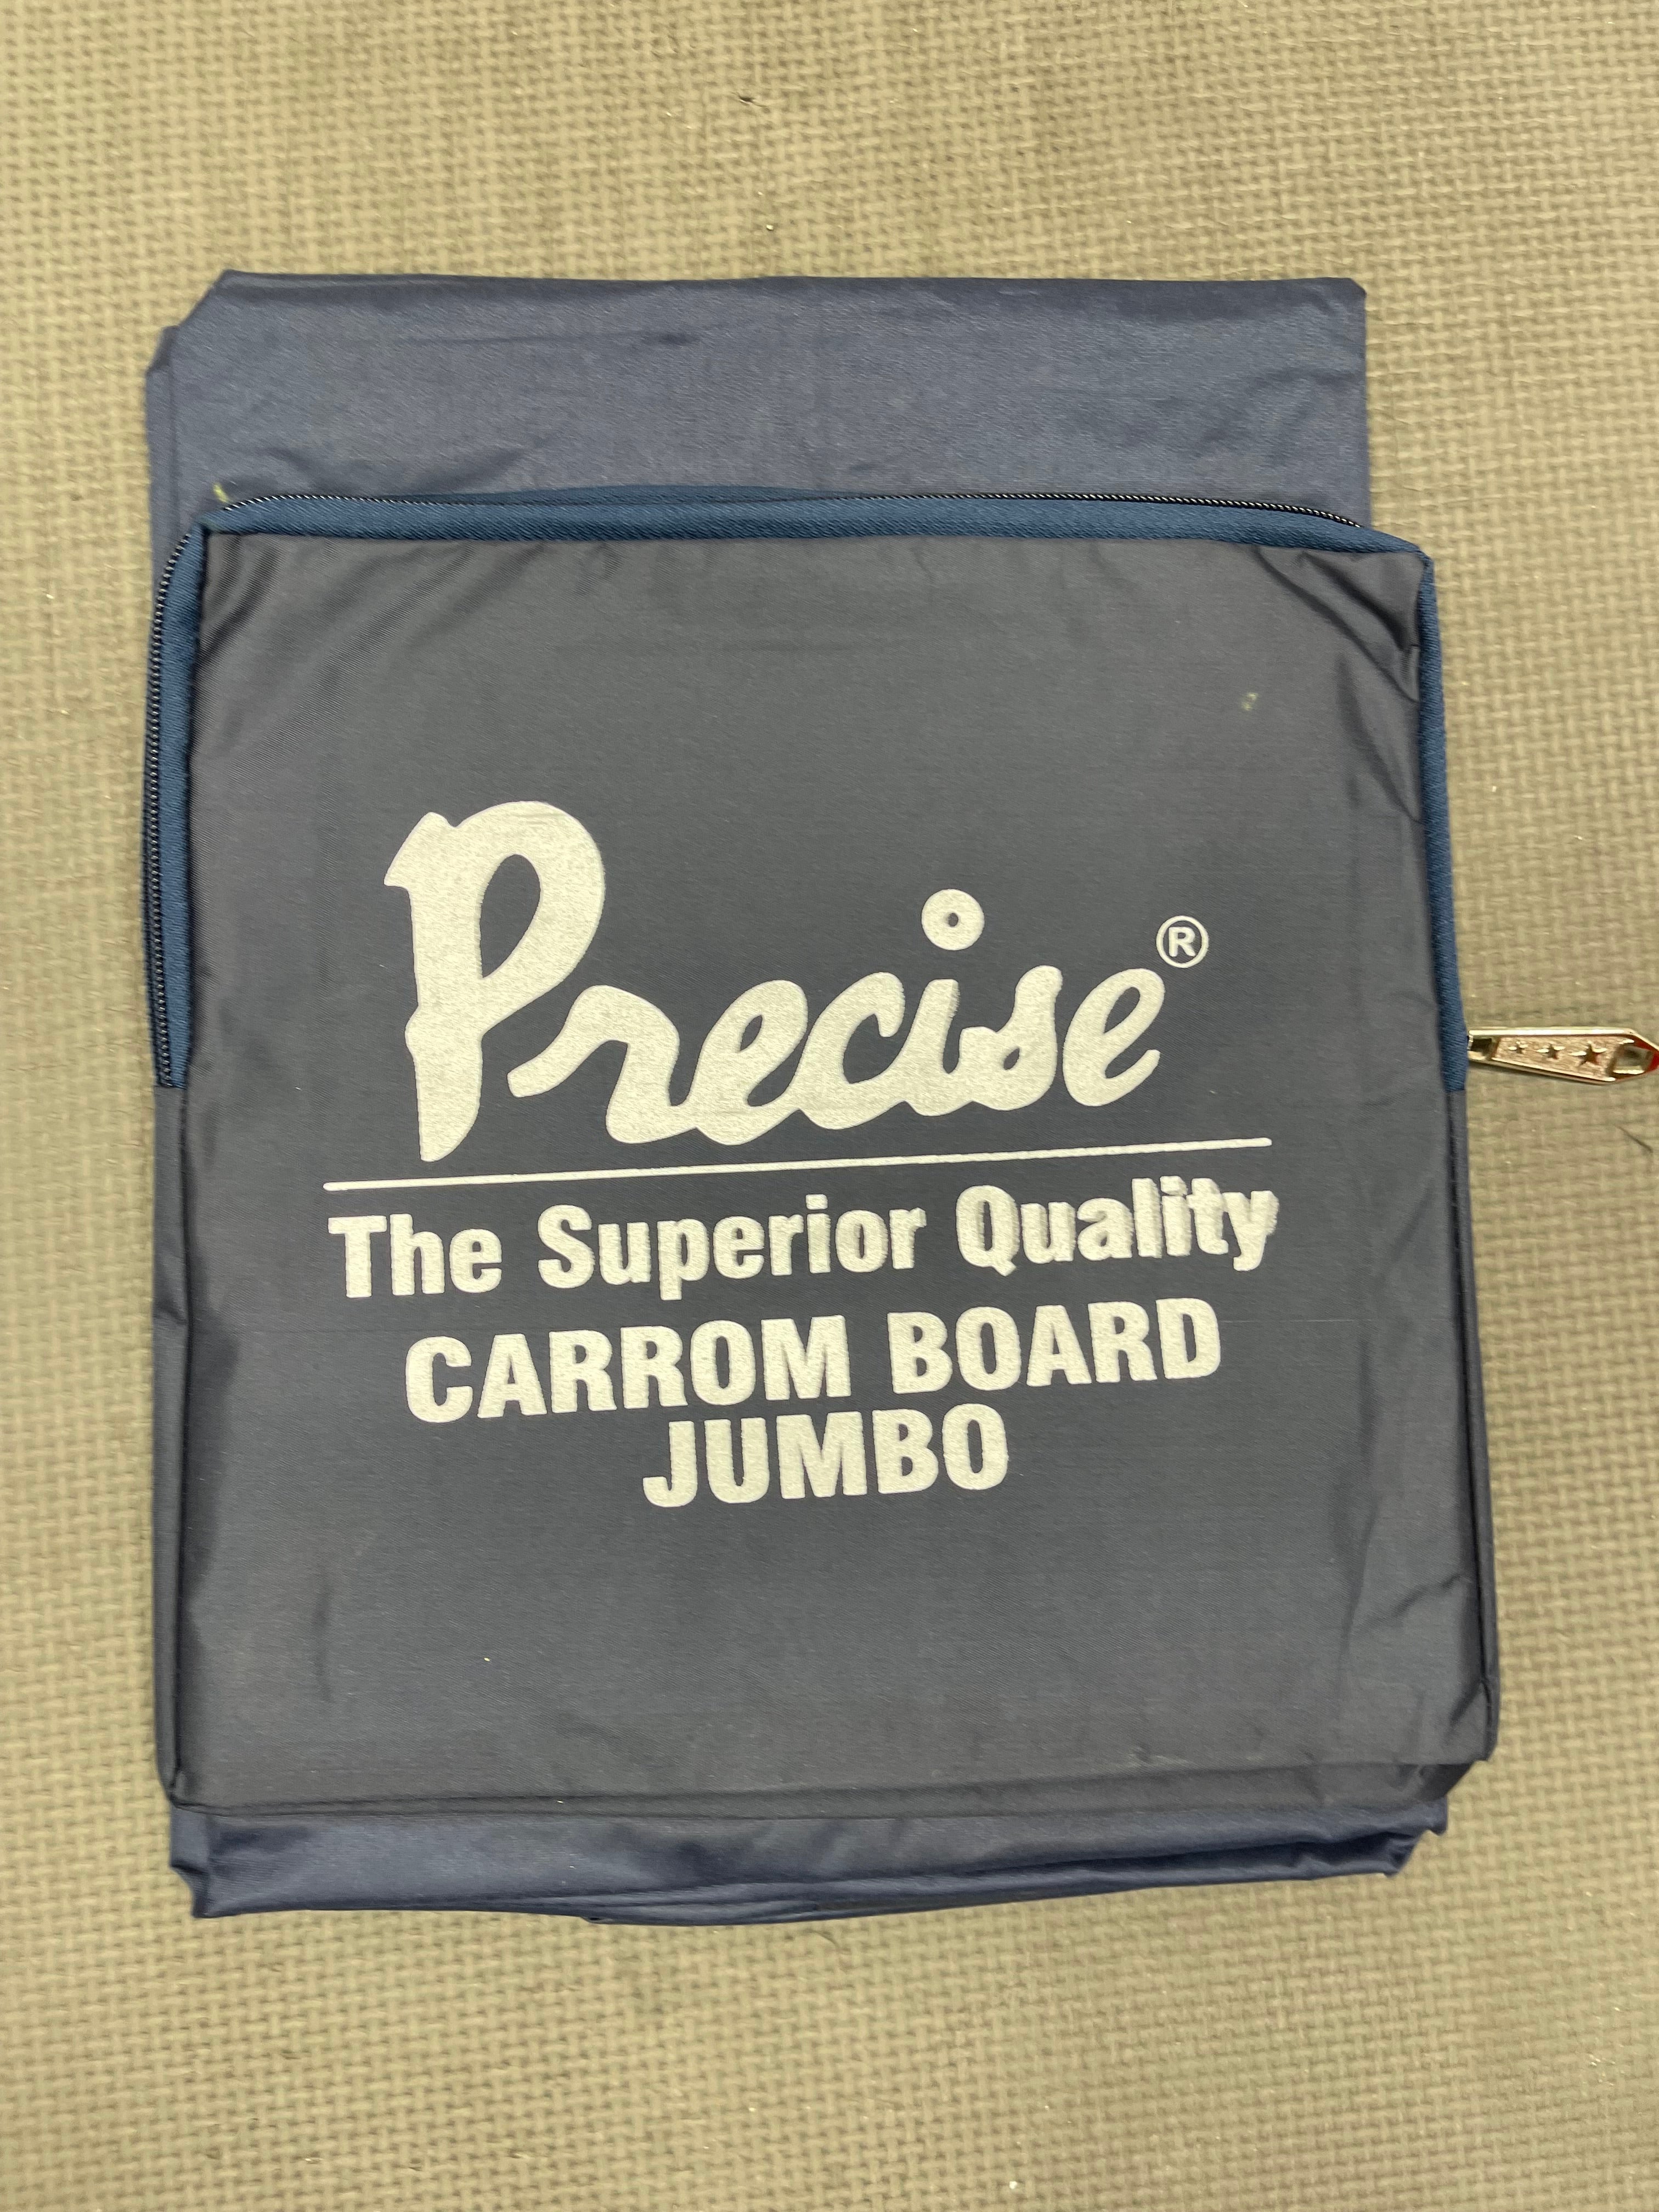 Precise Jumbo / BullDog Carrom Board Bag